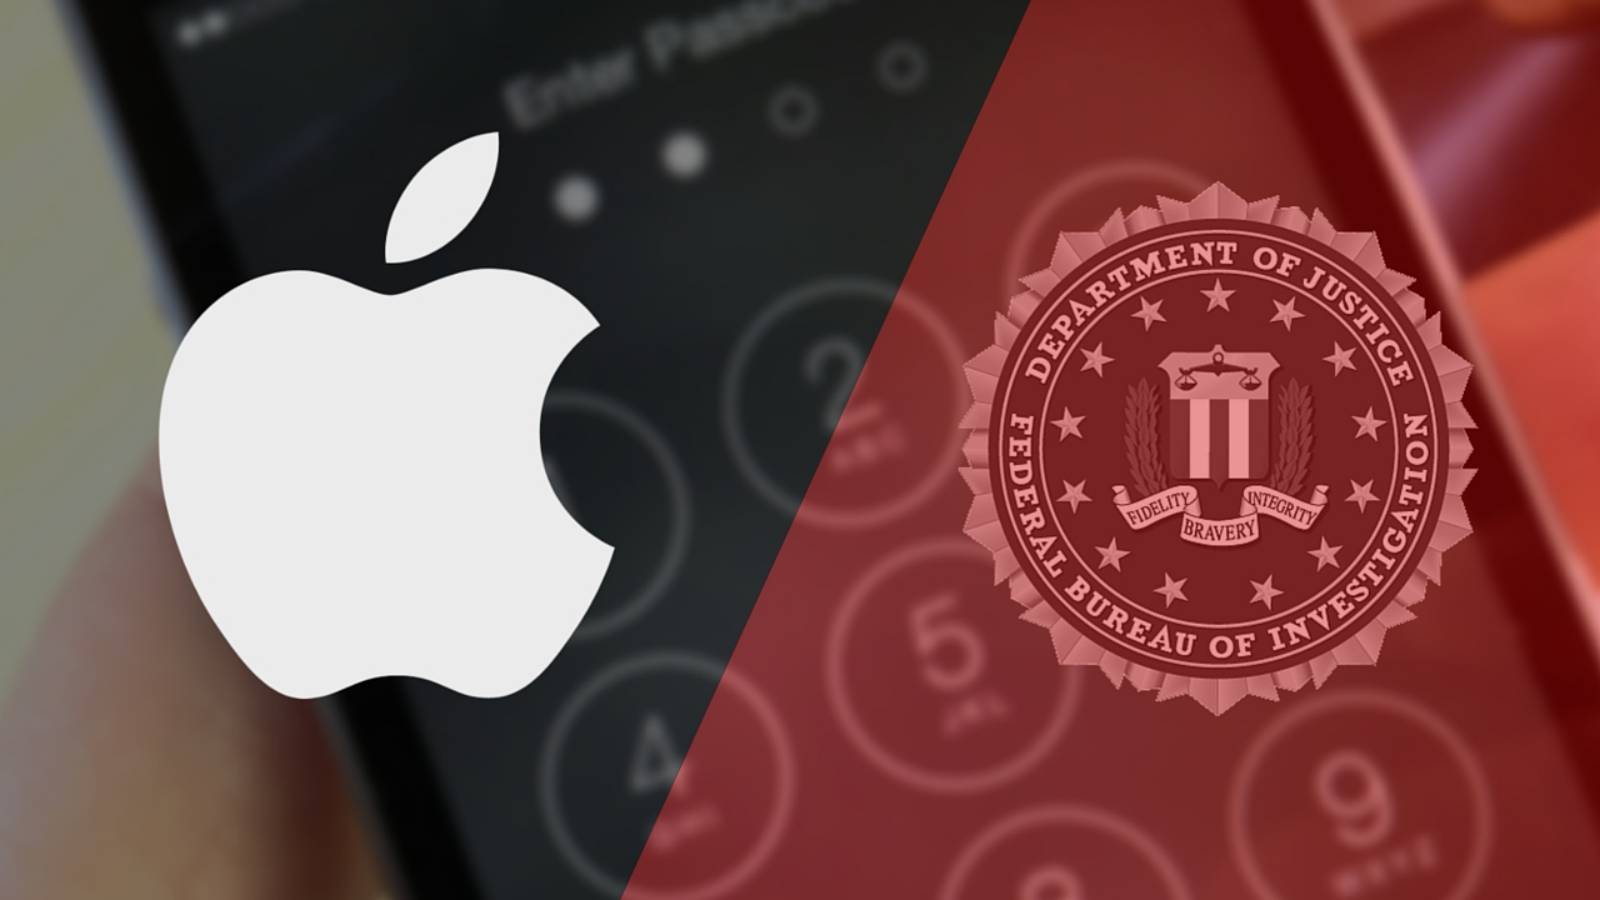 Apple iPhone z wojny FBI